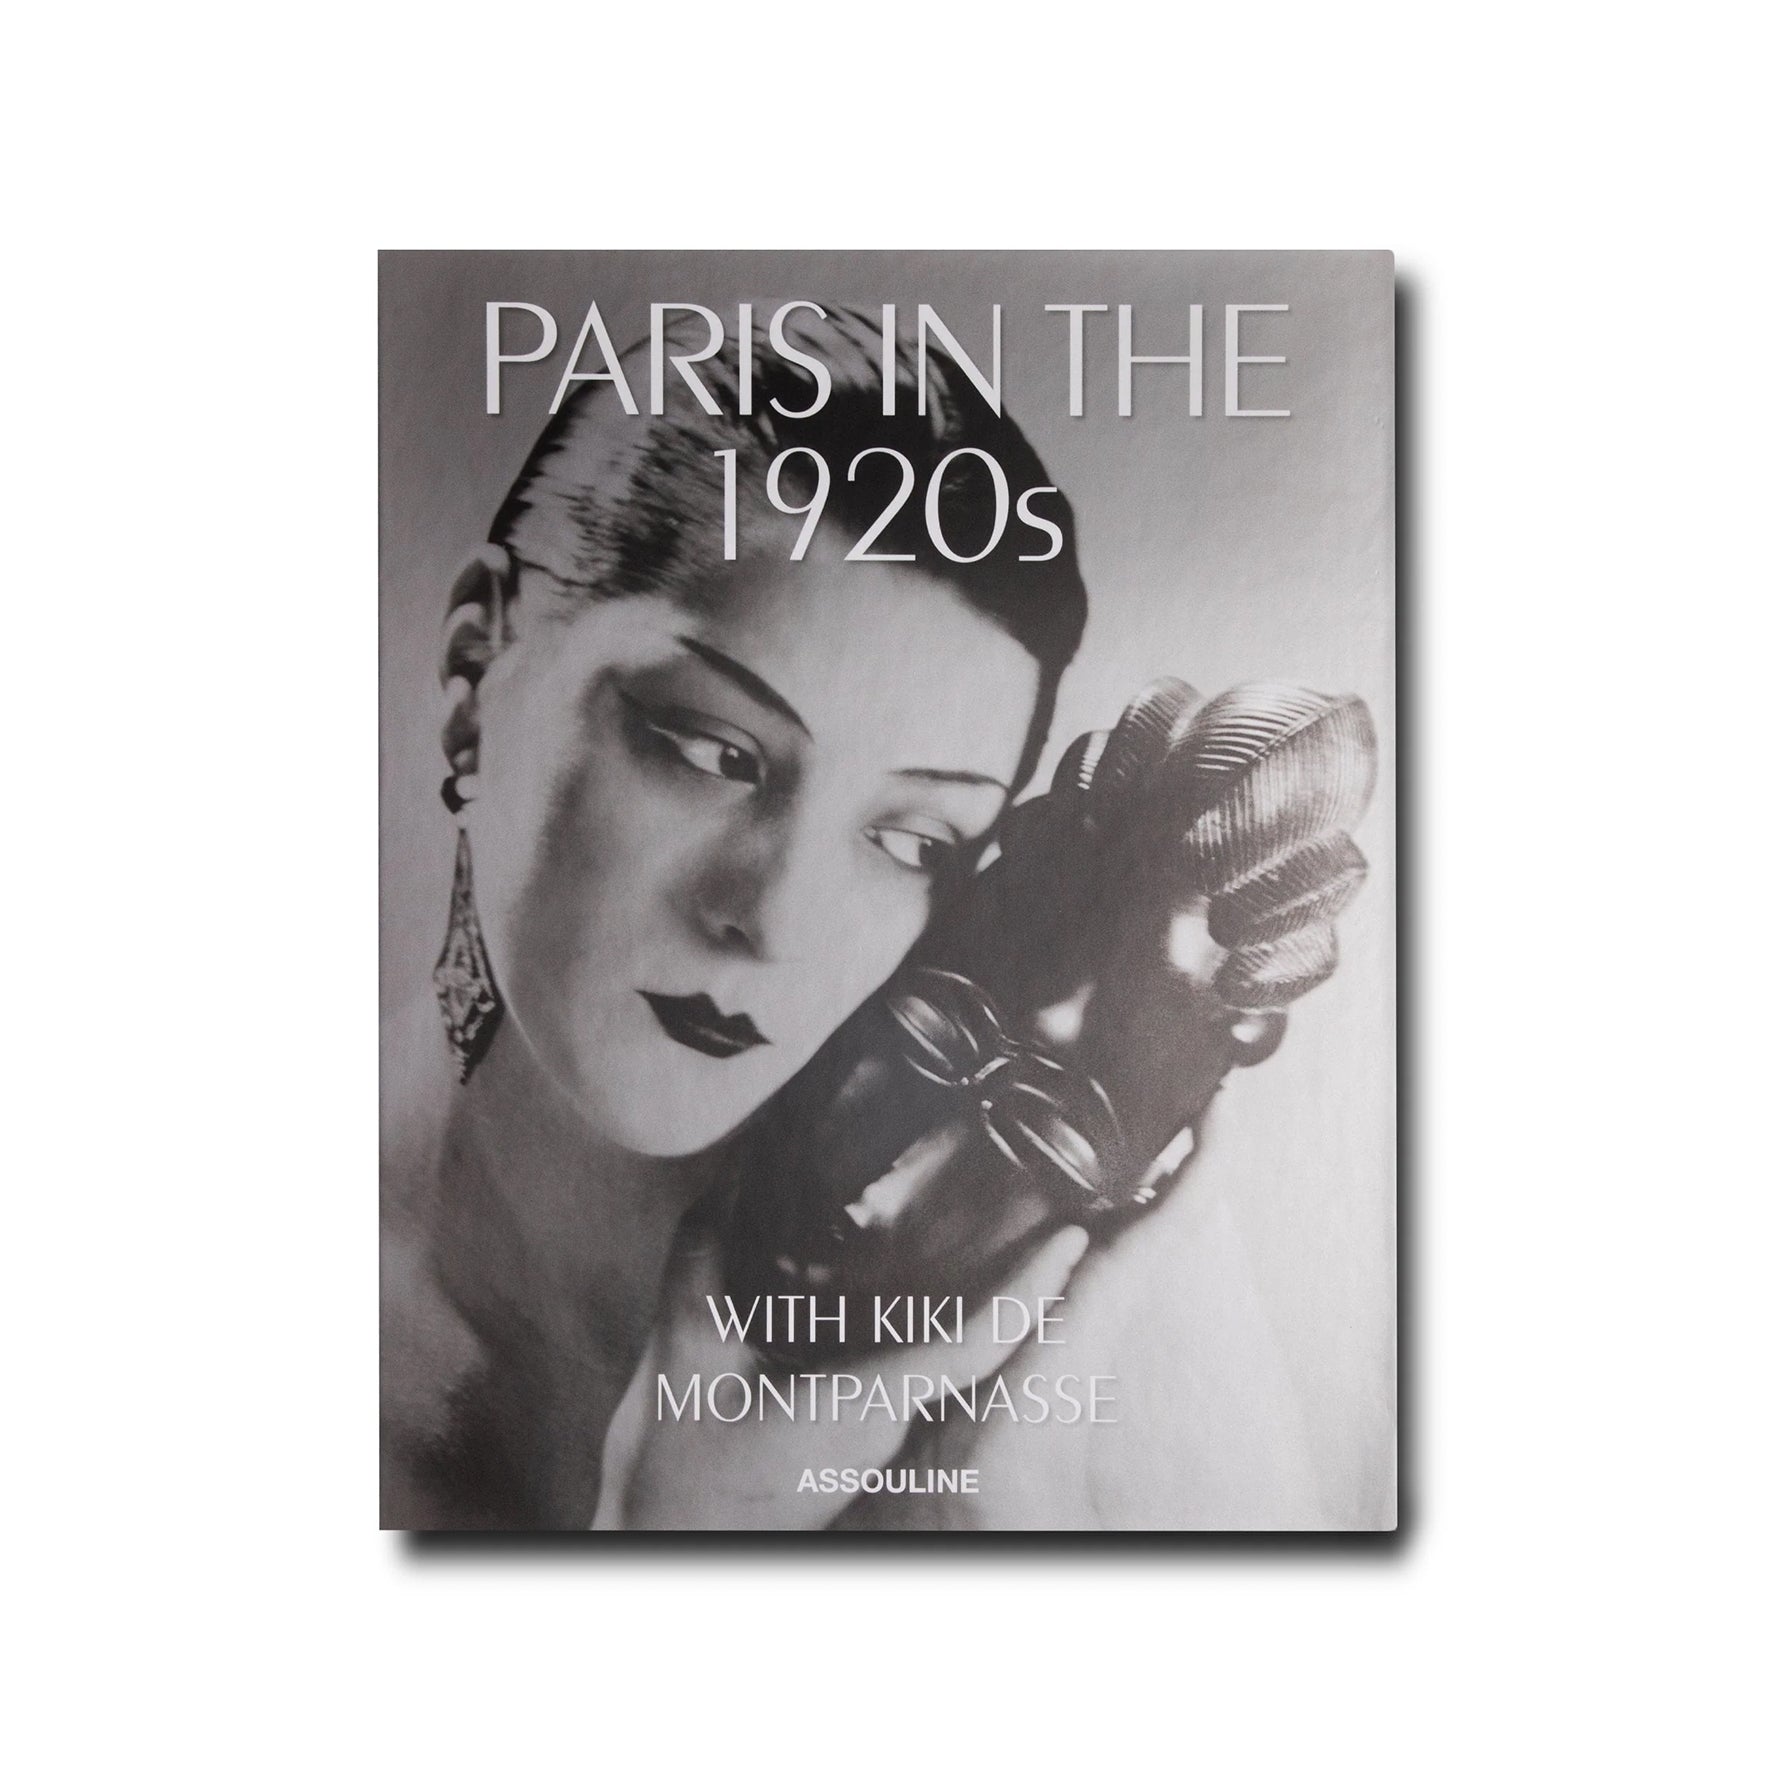 Paris in the 1920s with Kiki de Montparnasse by Assouline